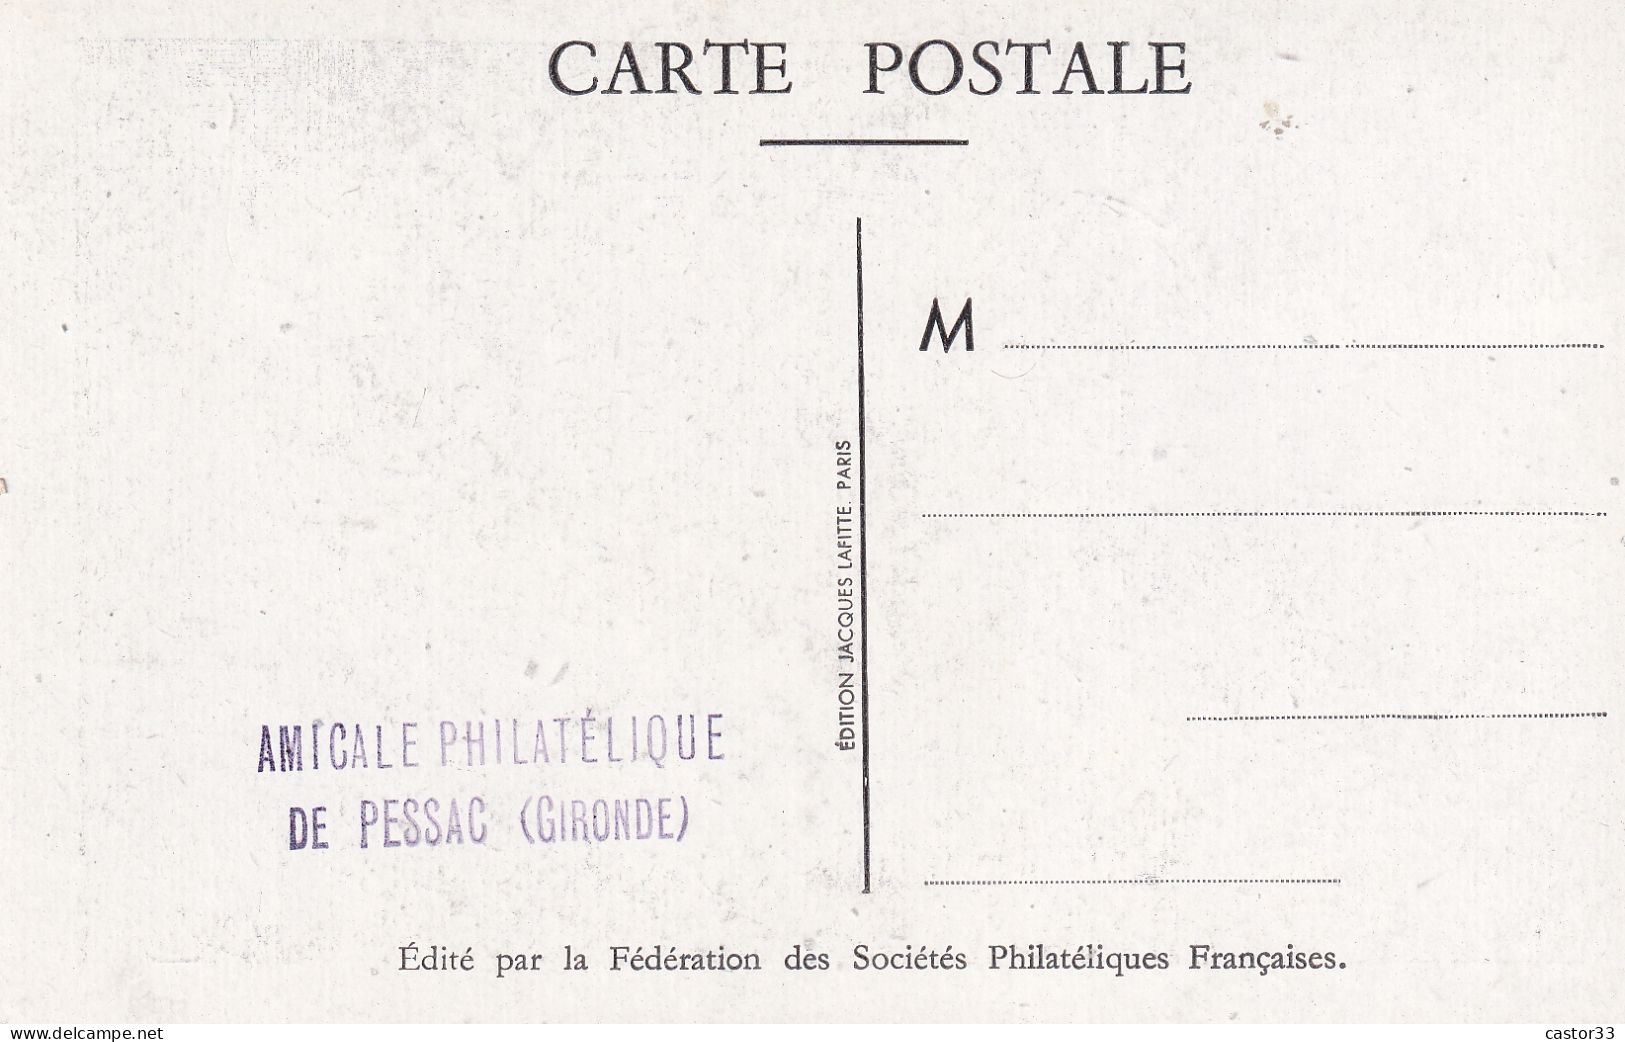 Journée Du Timbre 1948, Etienne Arago - Tag Der Briefmarke